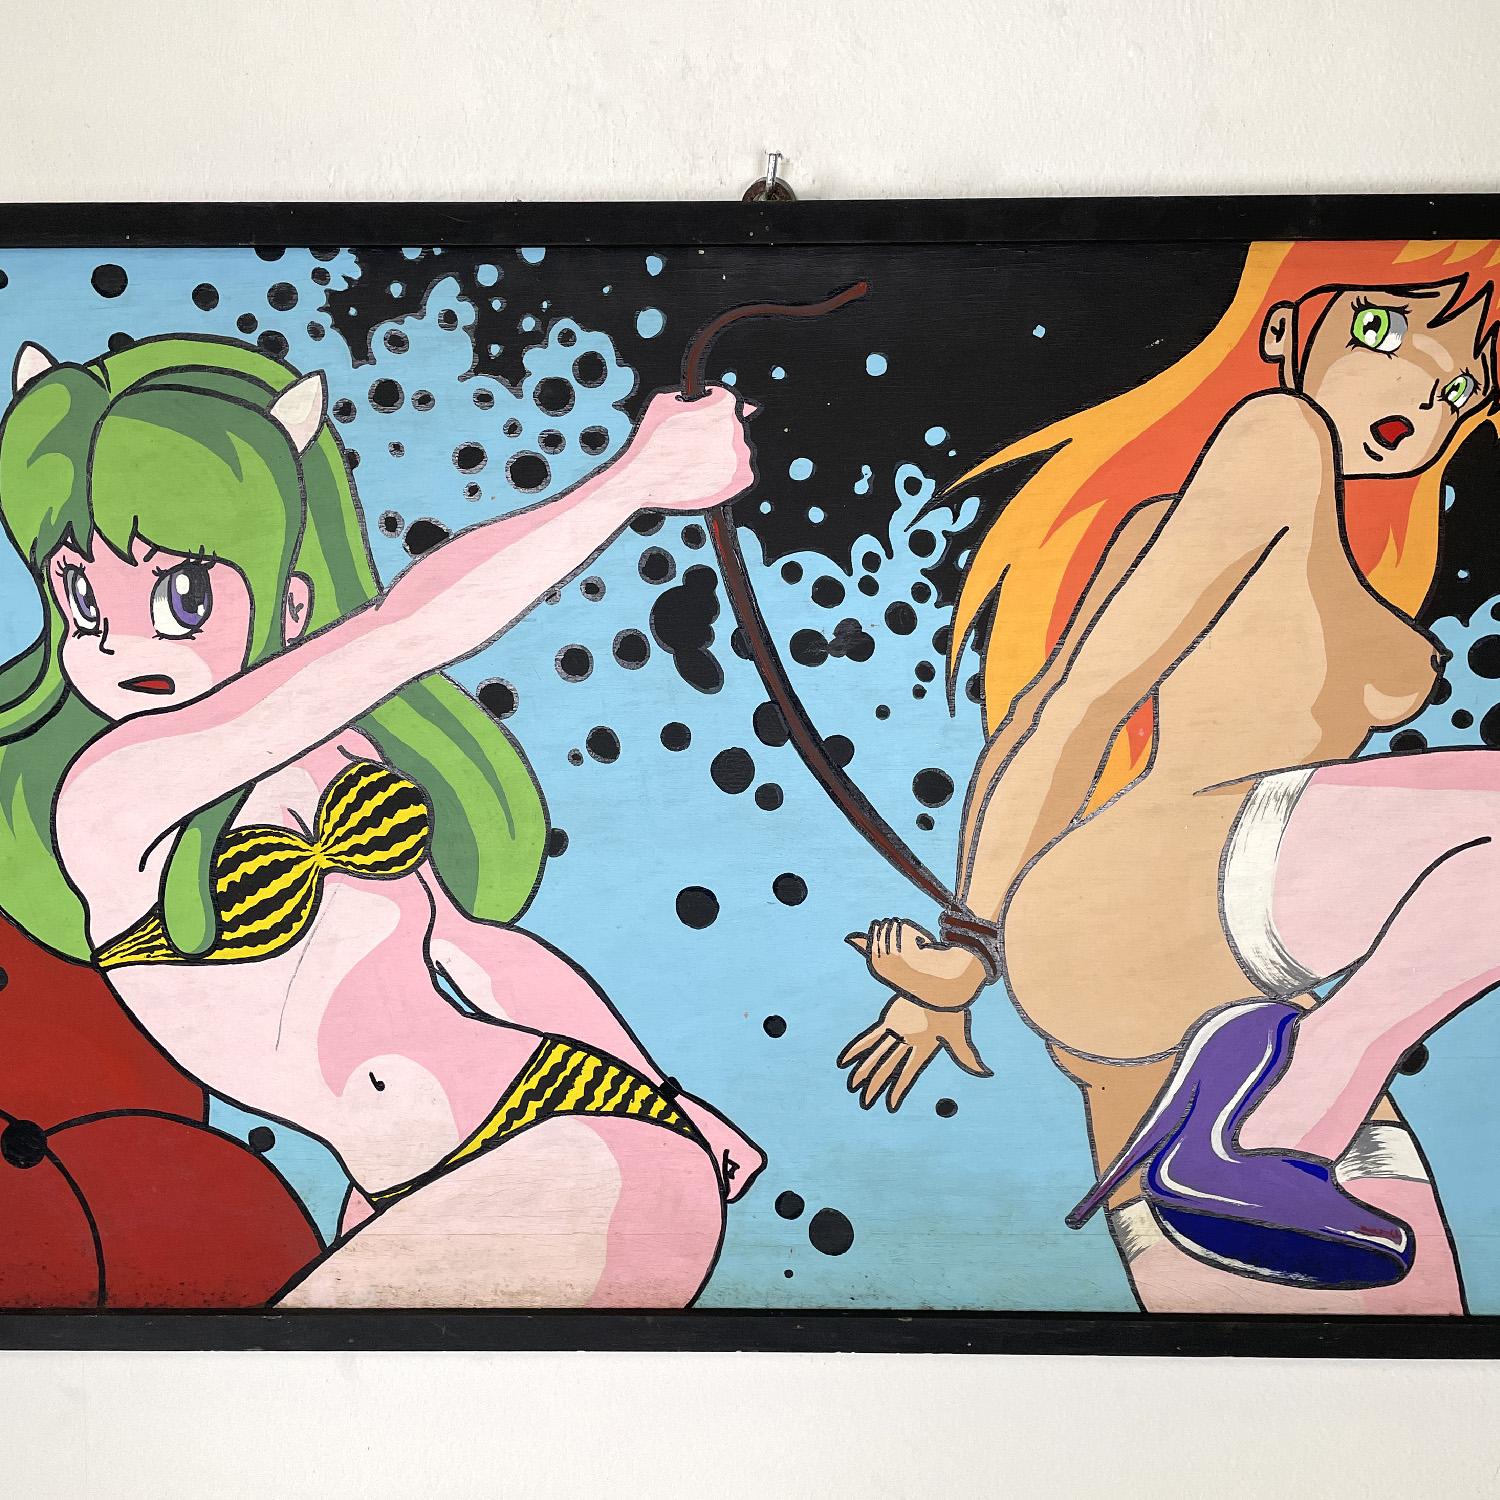 Wood Italian modern erotic Japanese manga painting by Gianni S99, 1990s For Sale